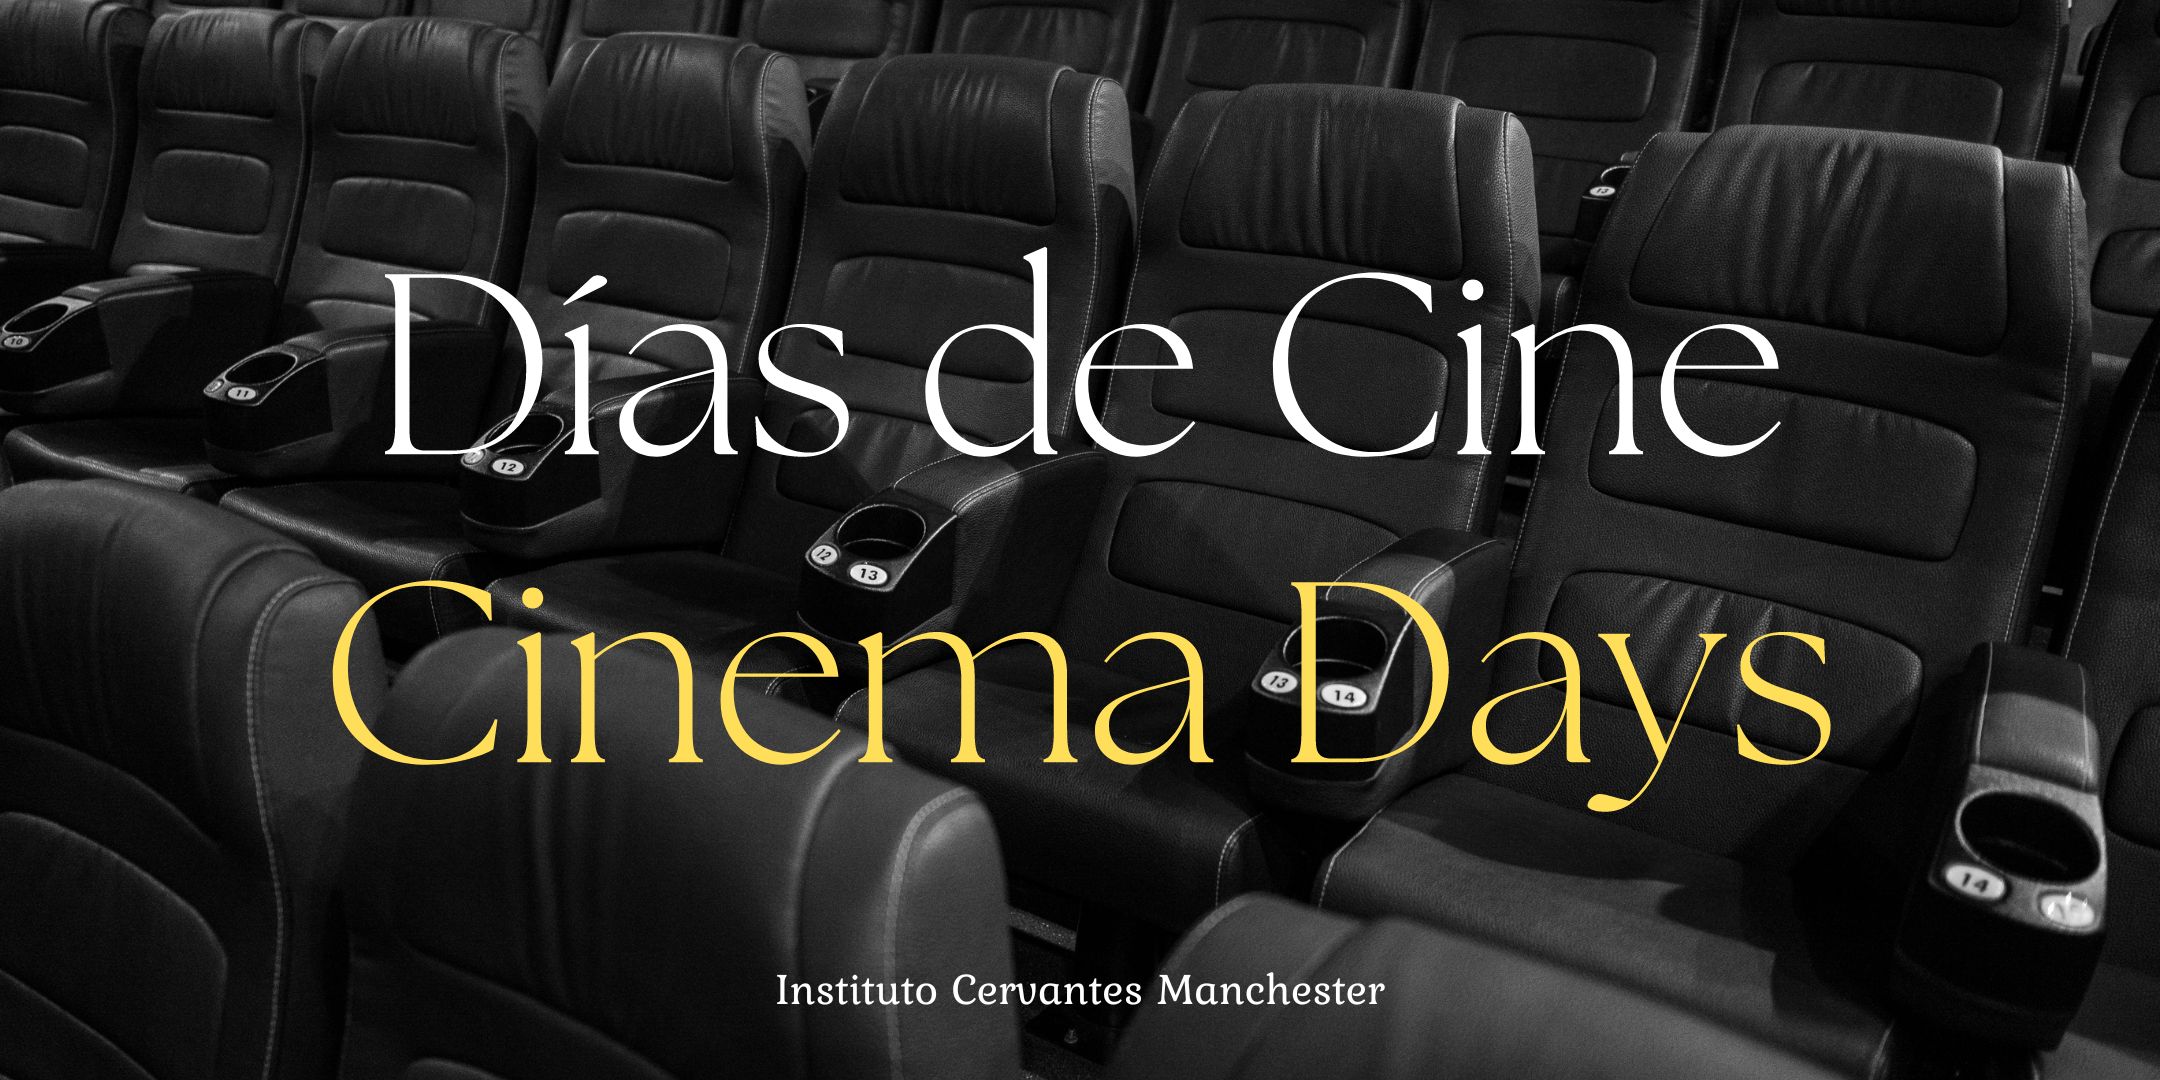 Cinema Days. Learn Spanish with Cinema